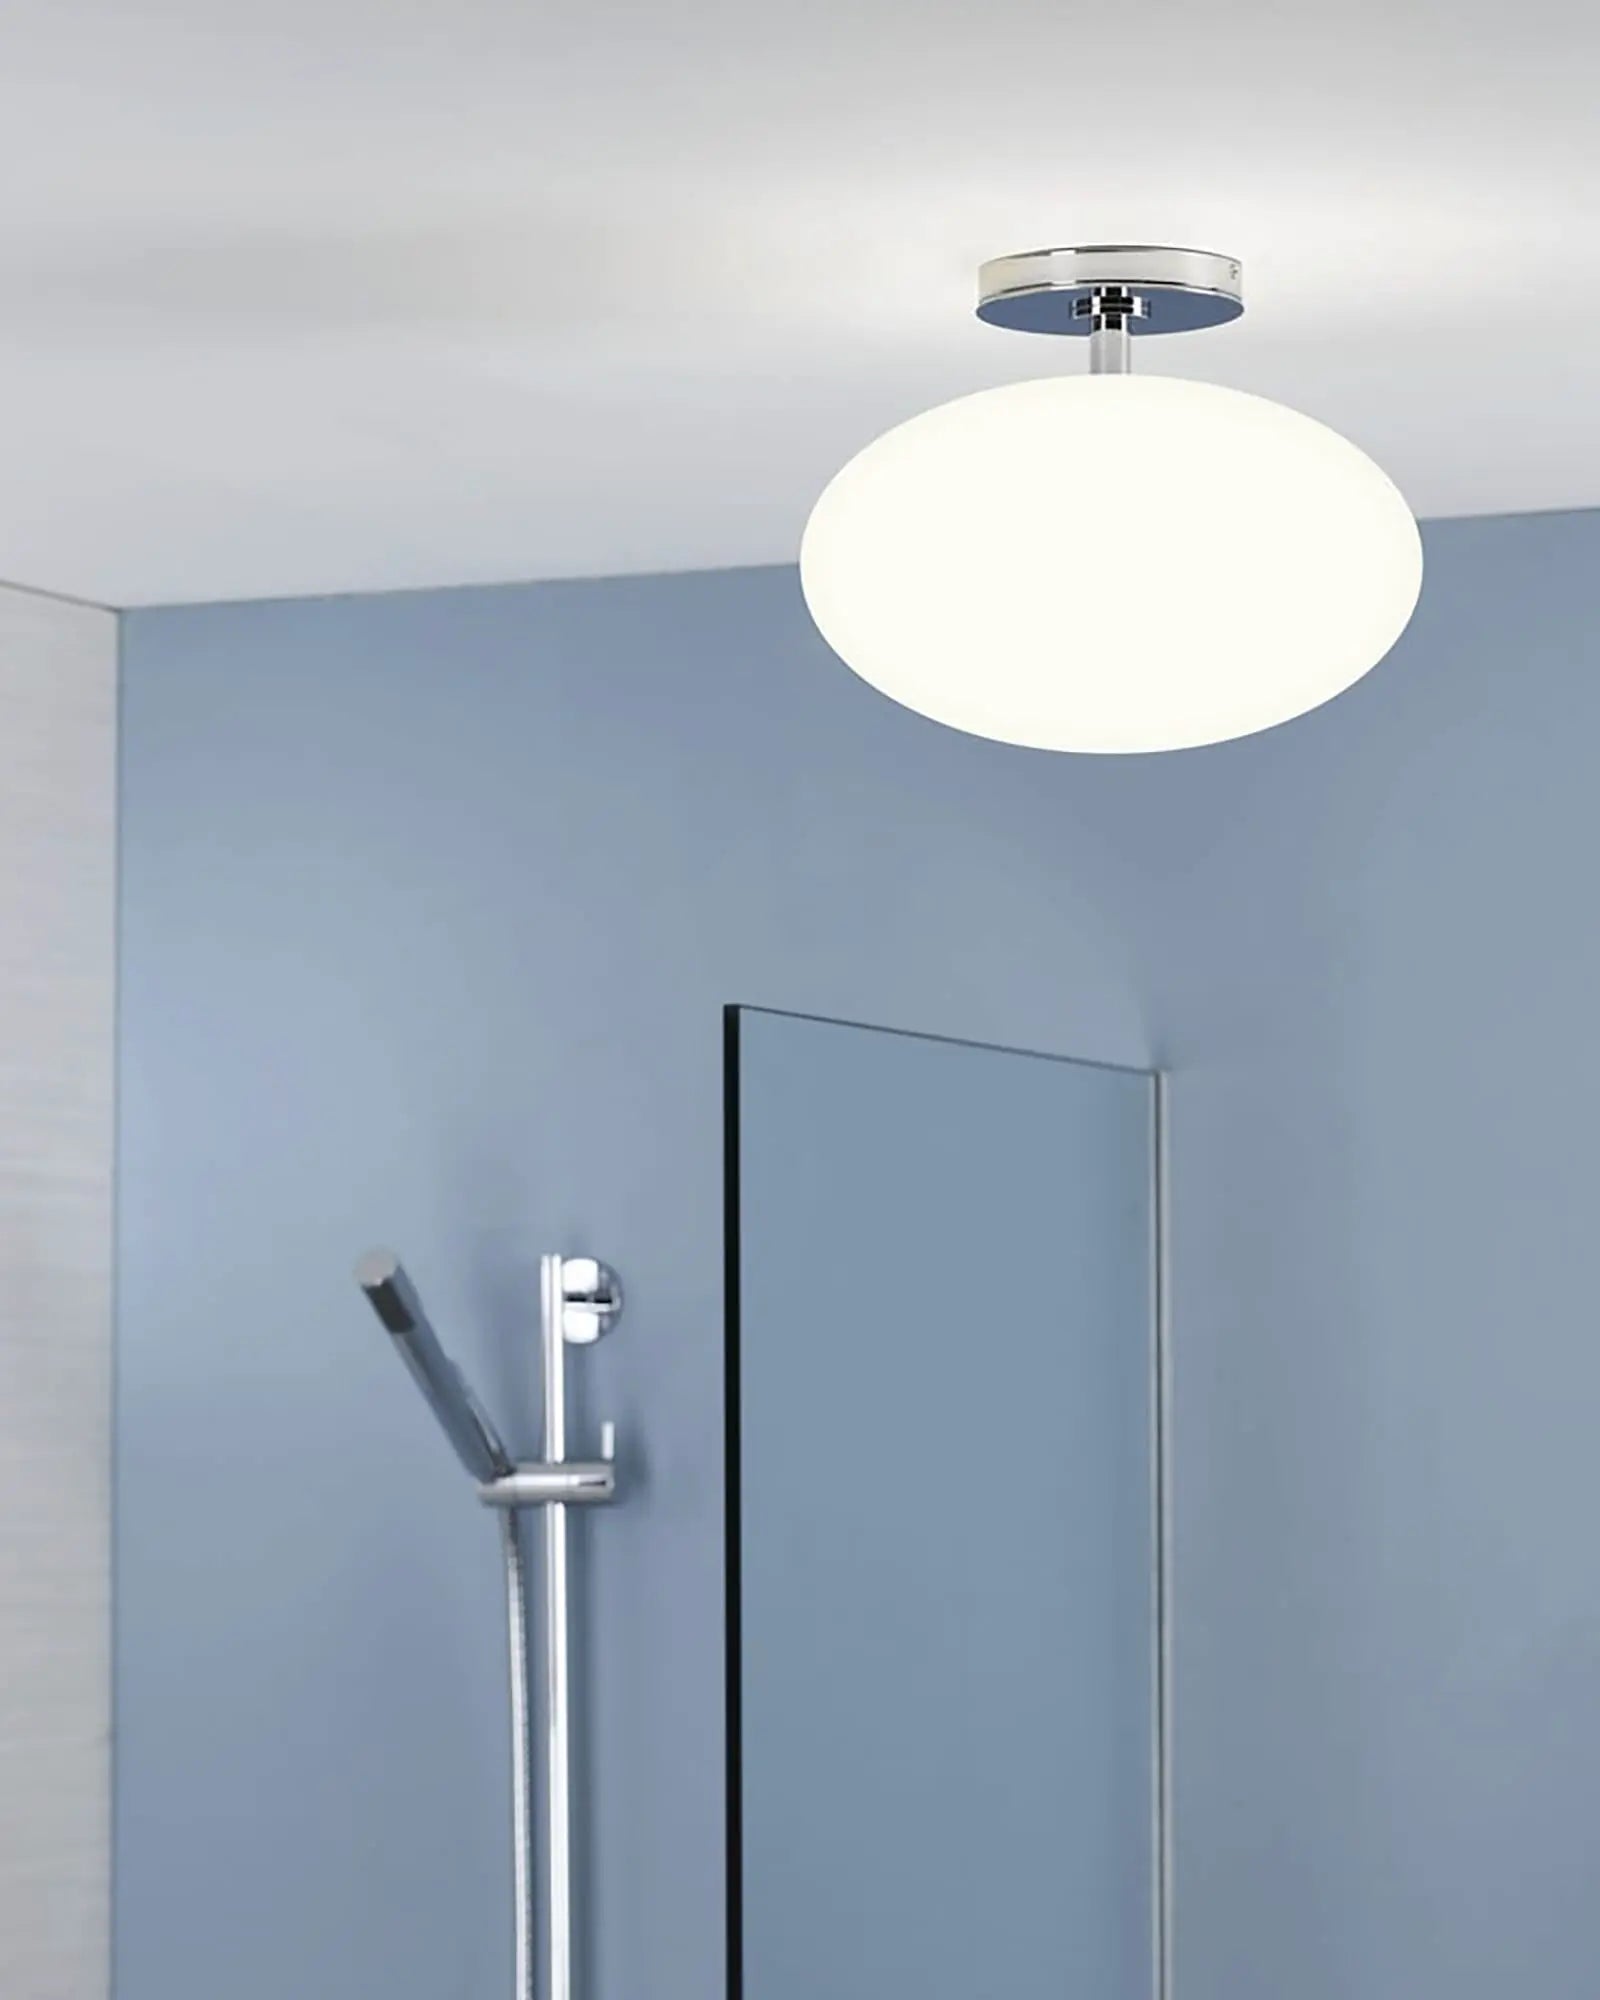 Zeppo orb glass ceiling light in a bathroom near the shower